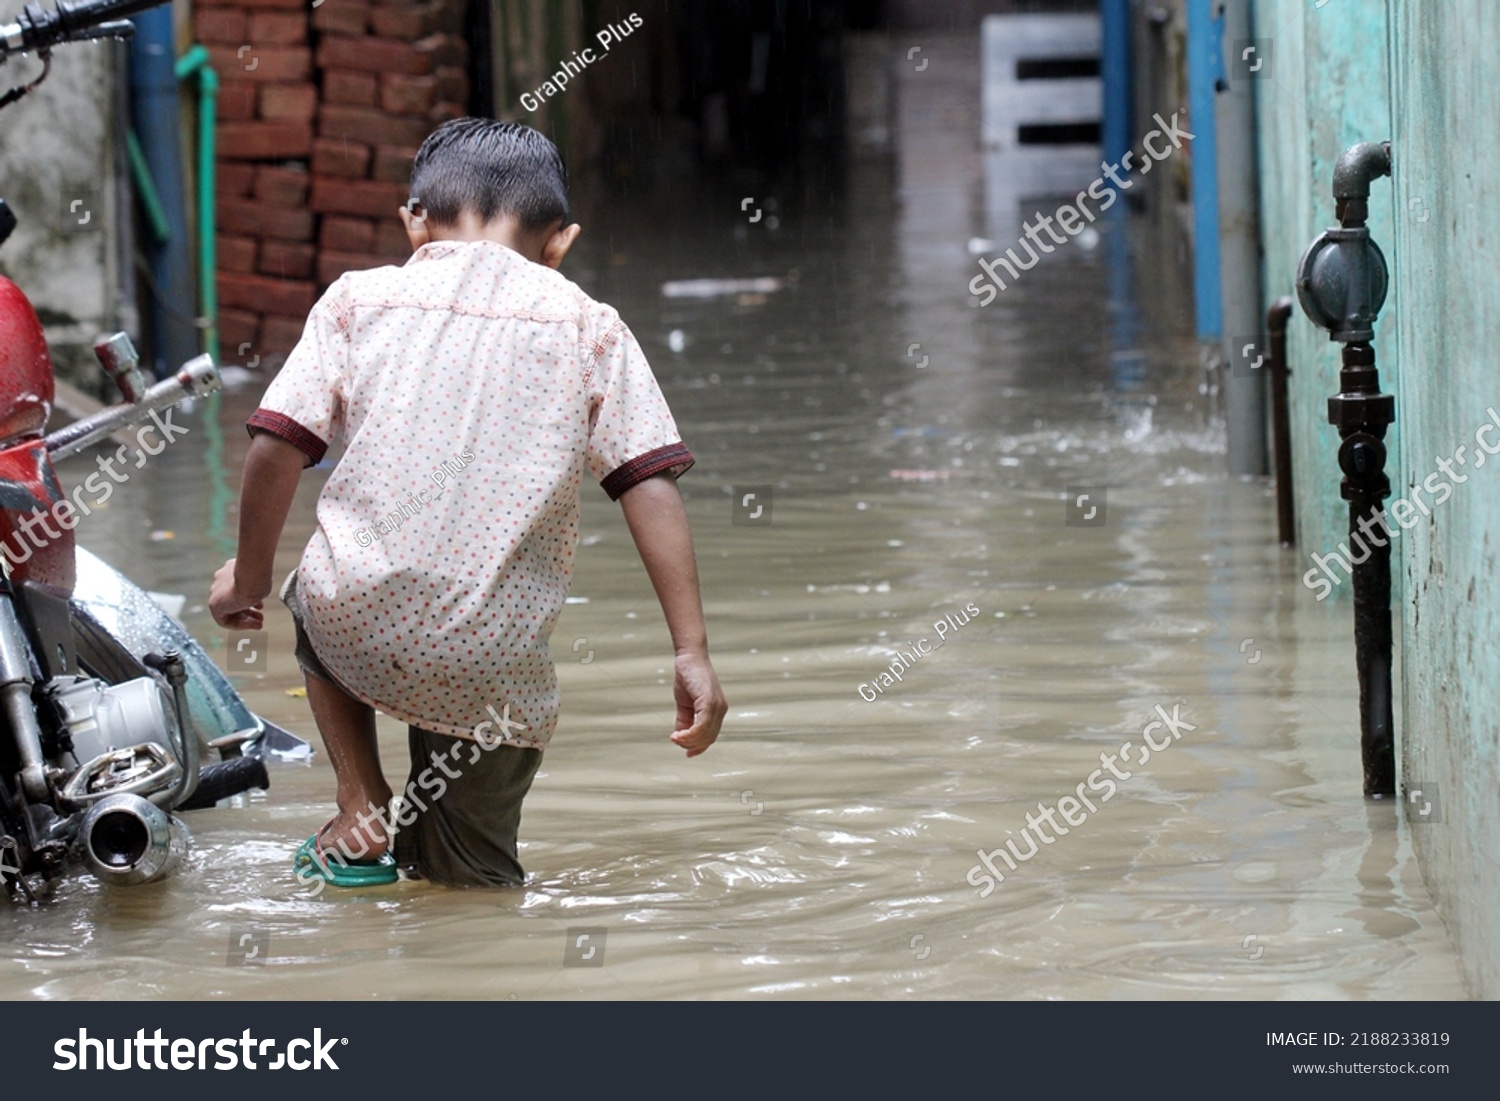 Pakistan Flood stock image 2022. A flood in a city and streets. Pakistan Flood 2022 stock image. Flood in Pakistan 2022 image. #2188233819